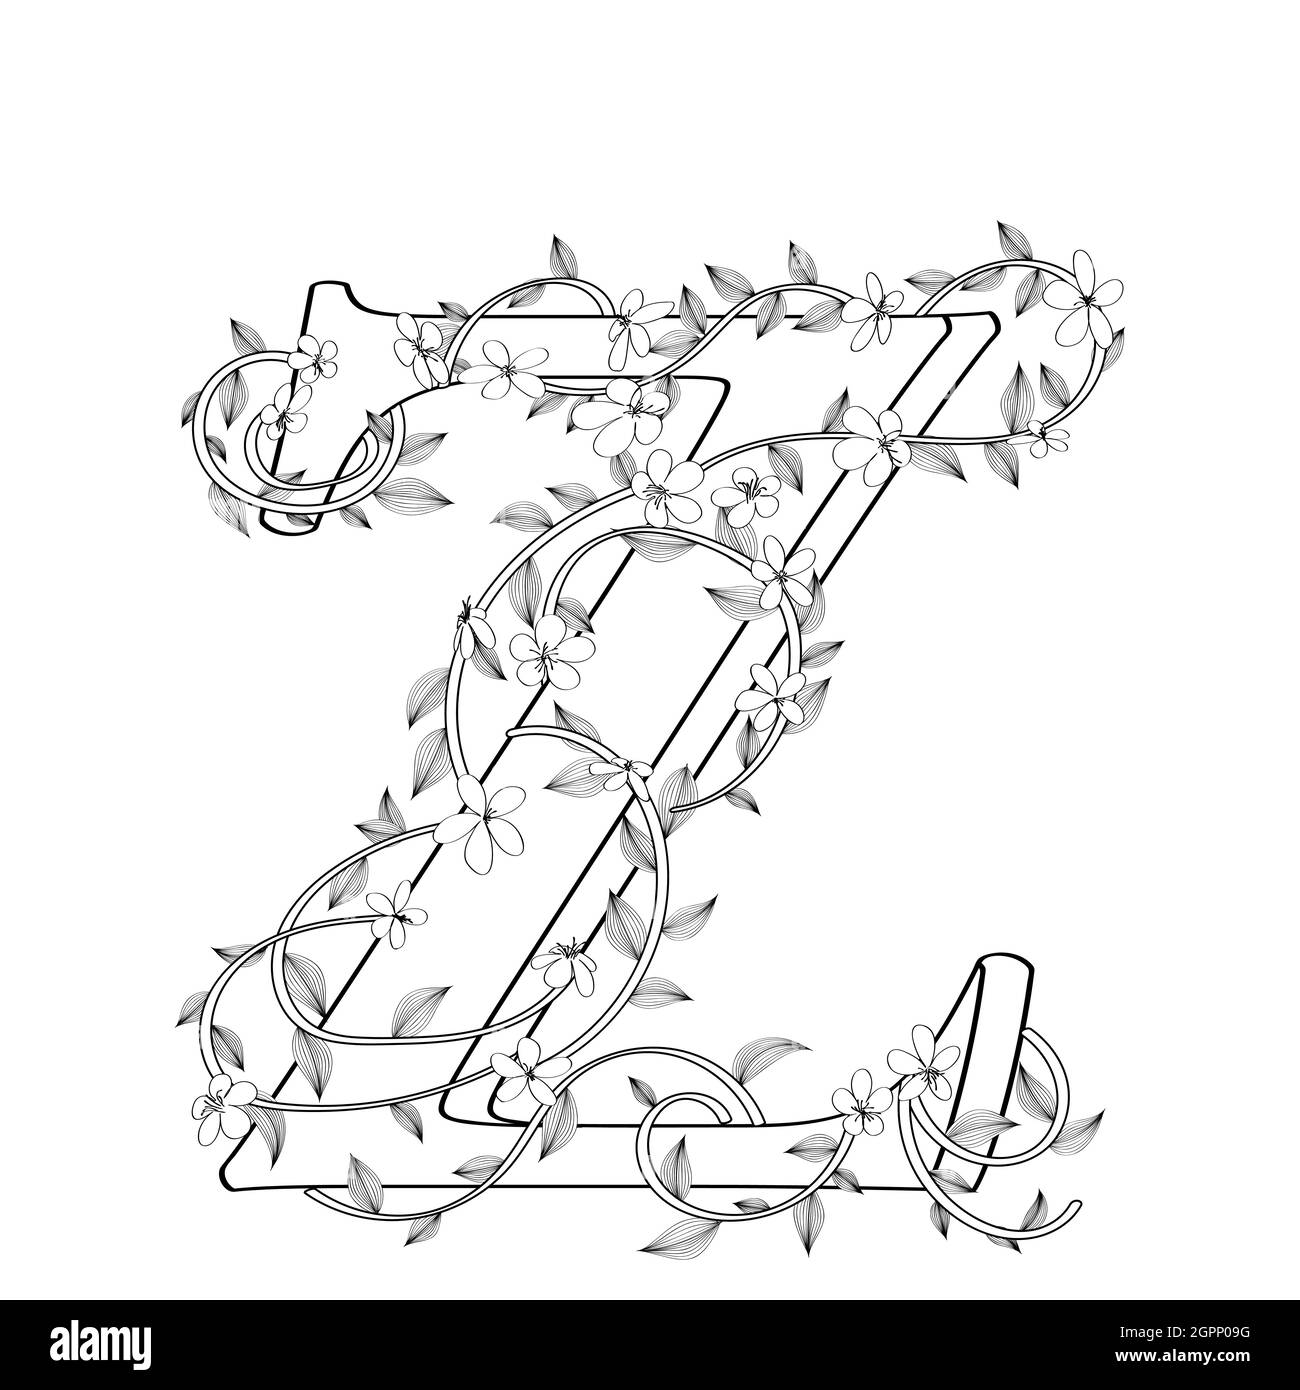 Letter Z 3d Vector 3d Black Letter Alphabets A To Z Abcd Letter Drawing  Letter Sketch Black Alphabets PNG Image For Free Download